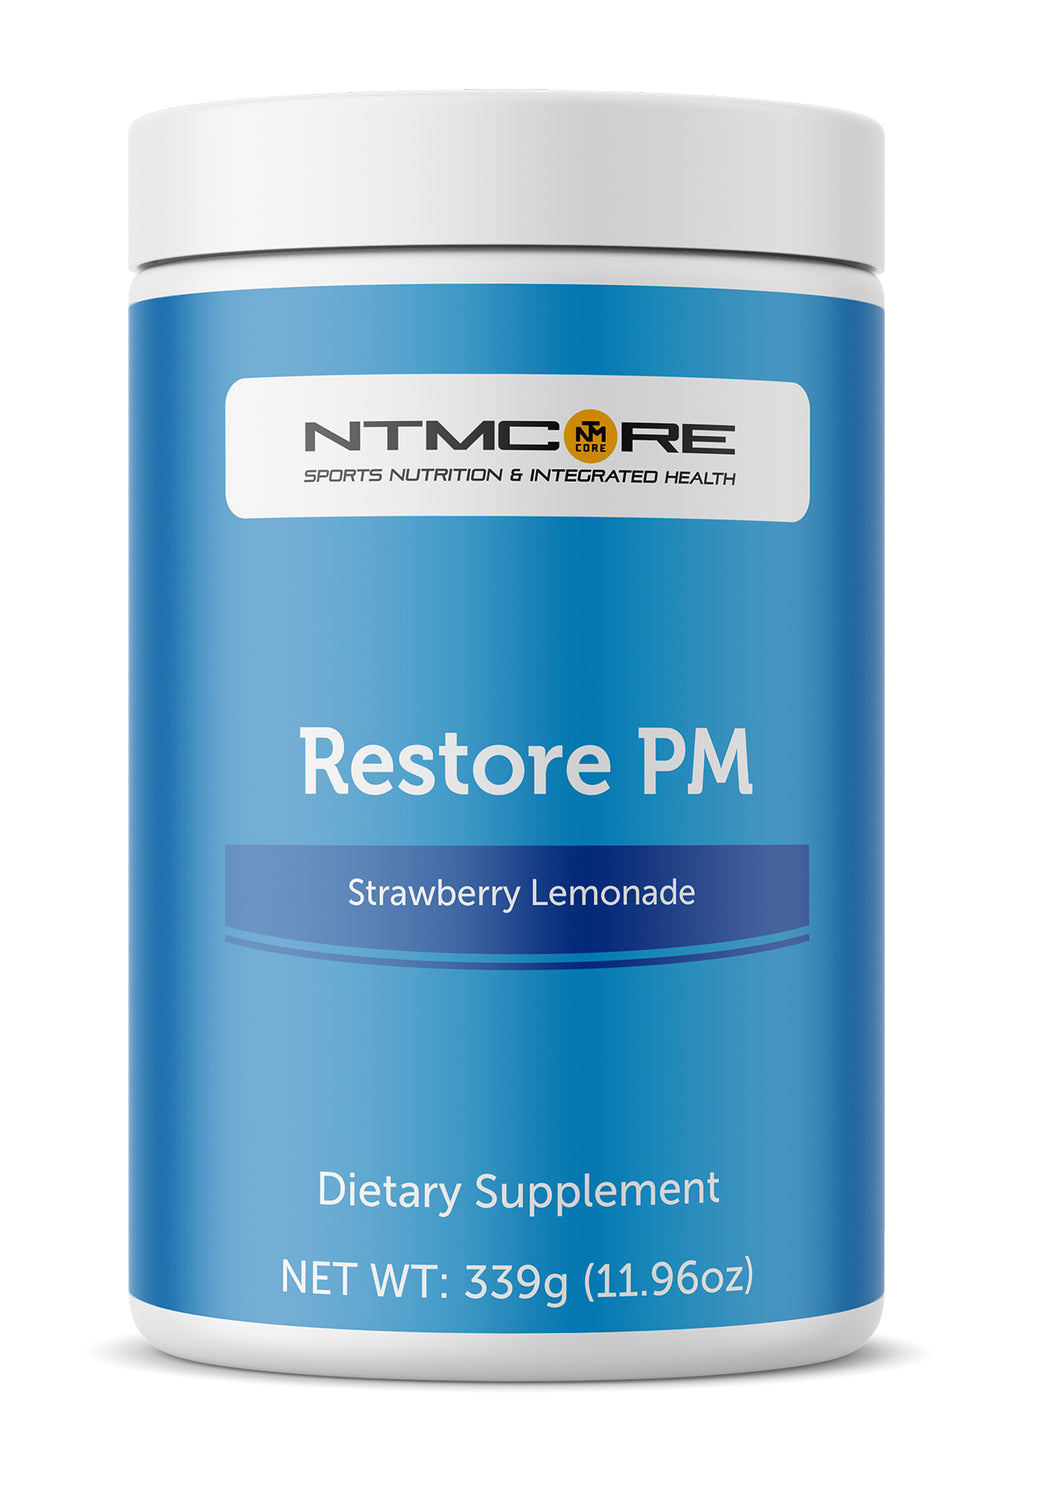 NTMCore RestorePM